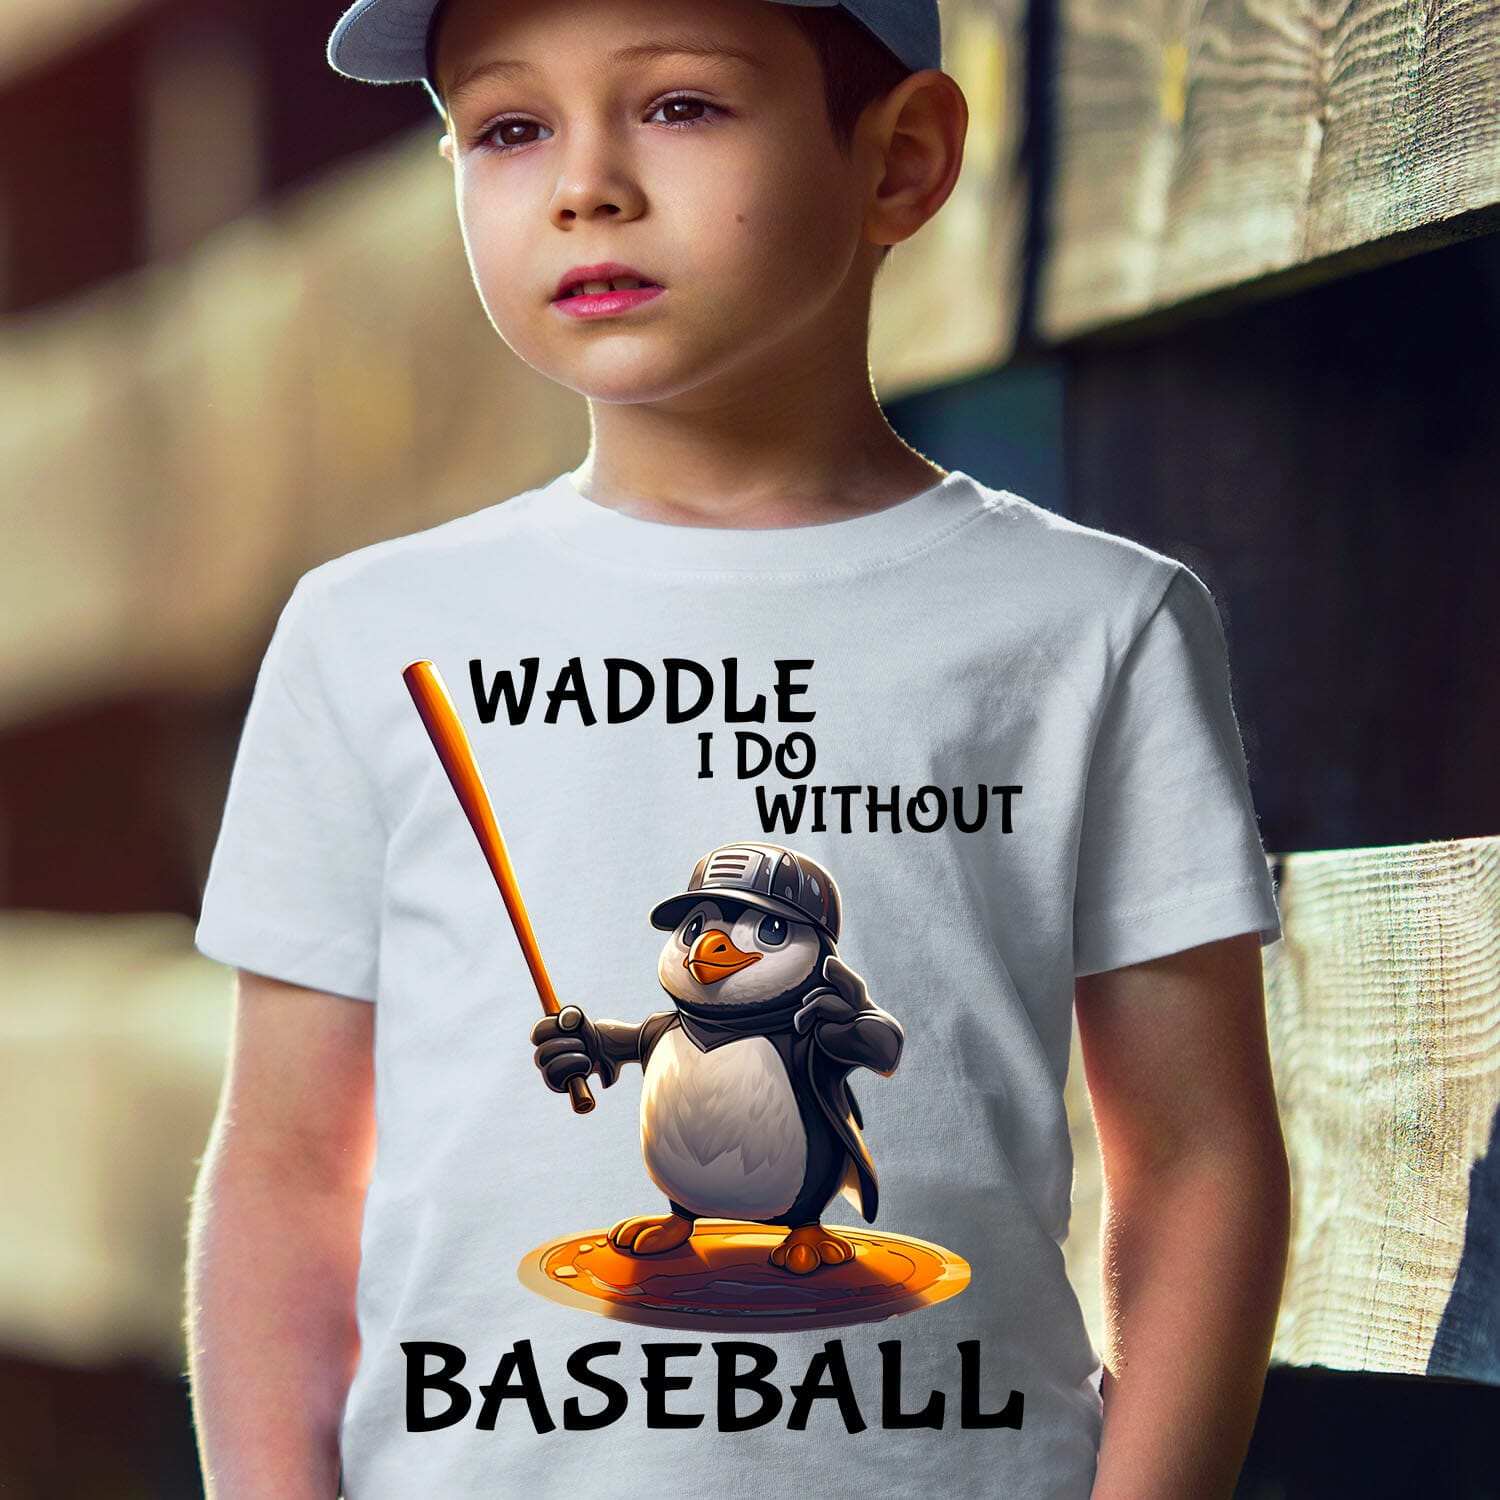 Penguin With A Baseball Bat - Funny T-Shirt Design For Boys